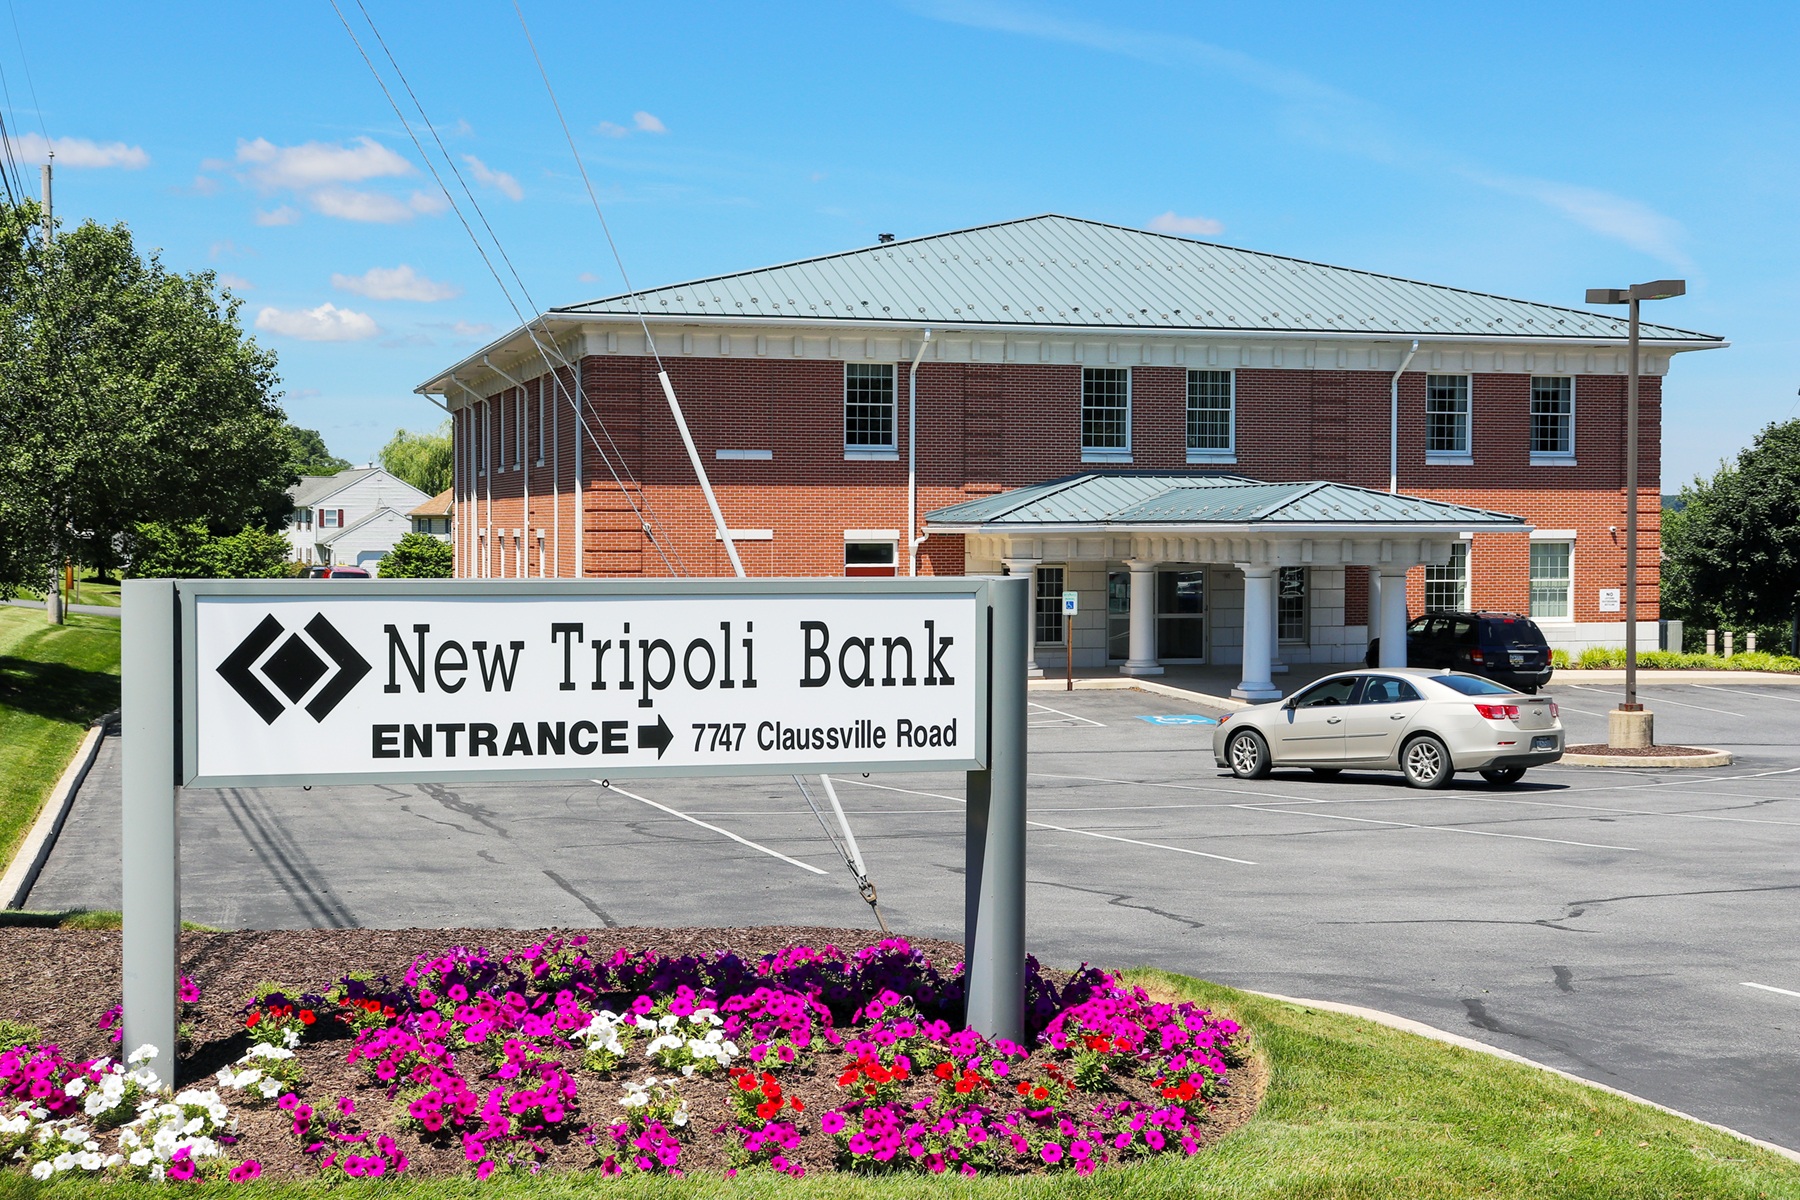 New Tripoli Bank